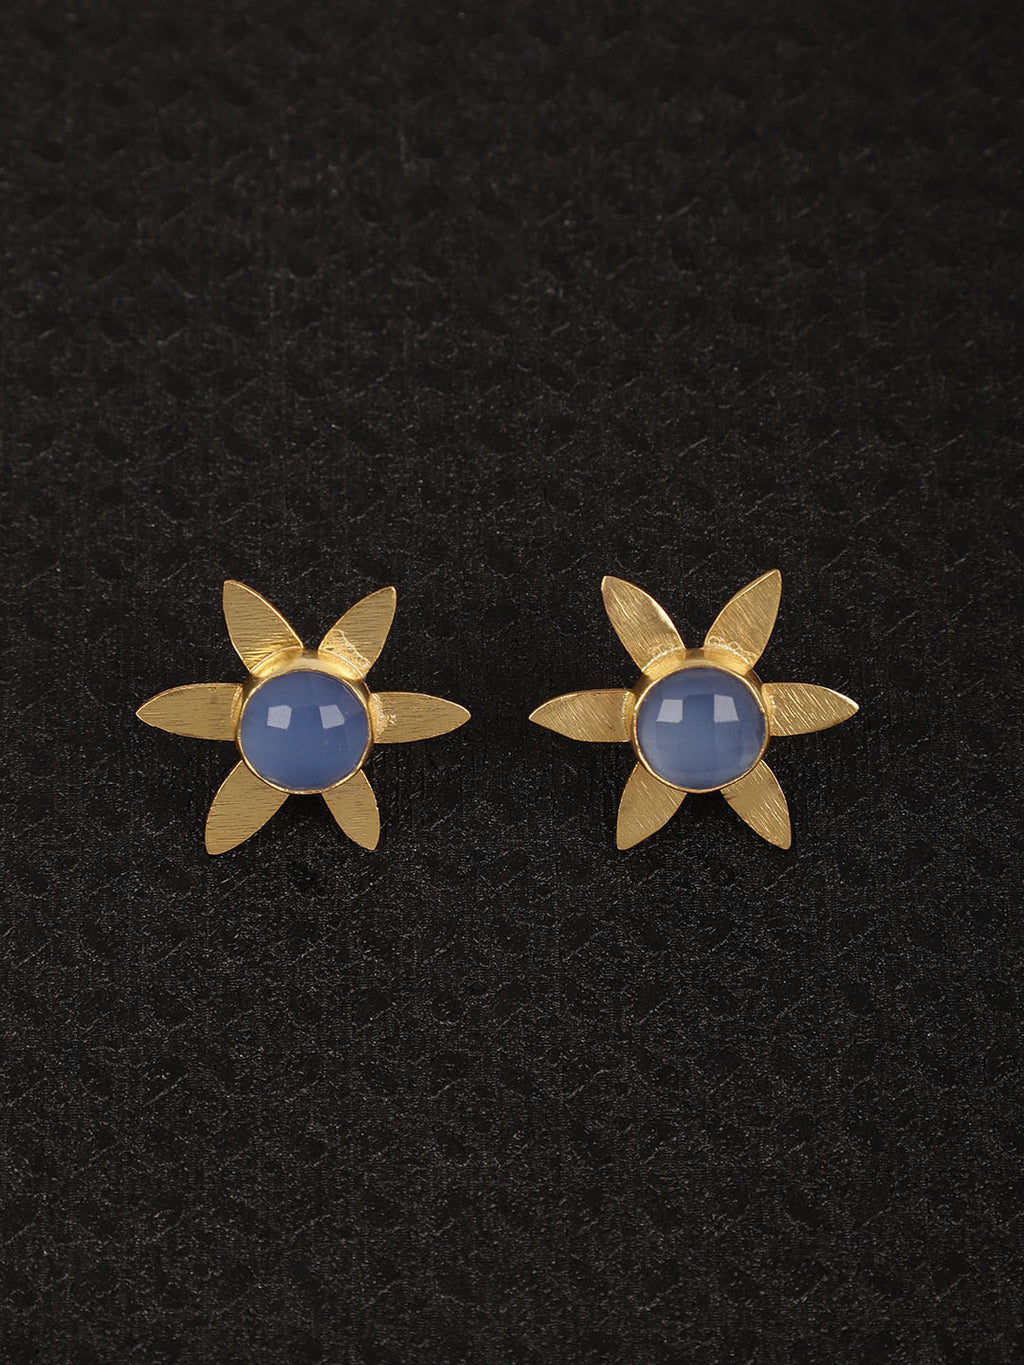 Gold Plated Blue Chalcedony Floral Studs, Earrings - Shopberserk